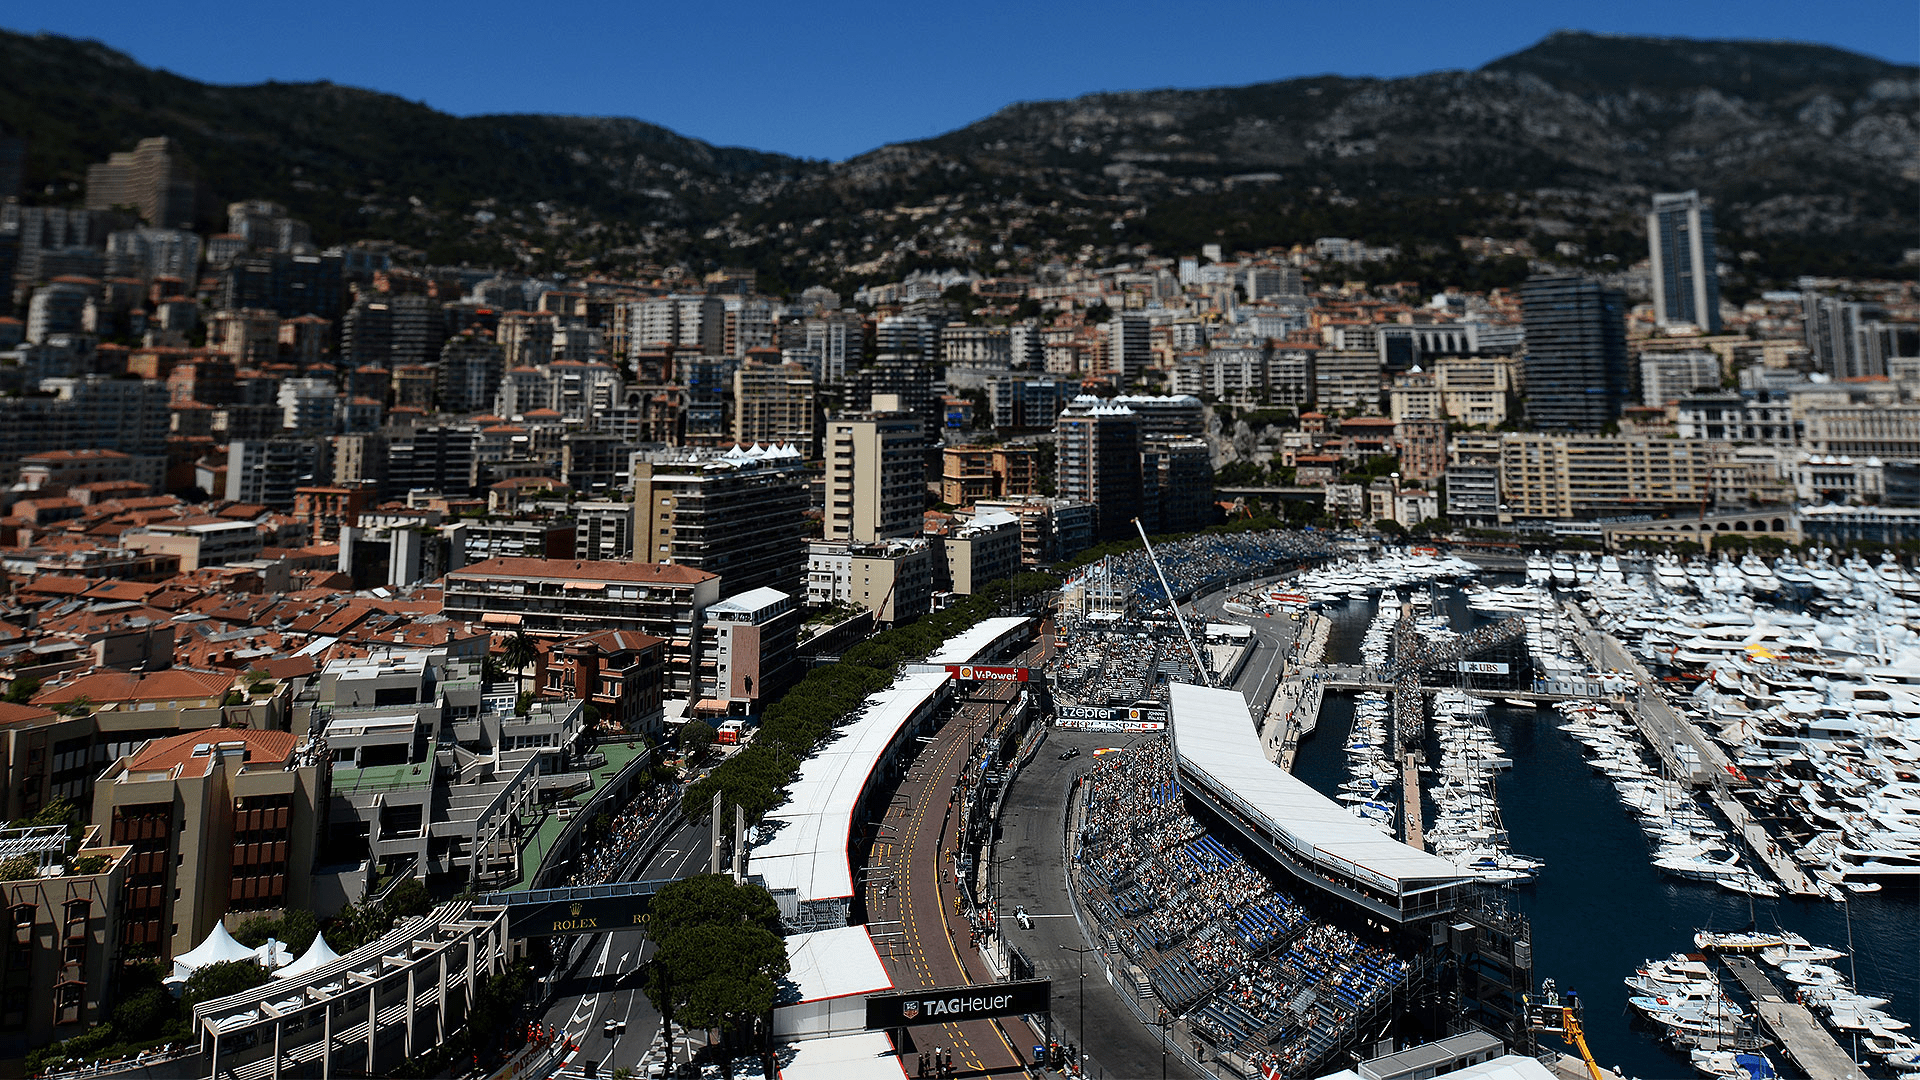 Monaco GP 2017: Review & highlights